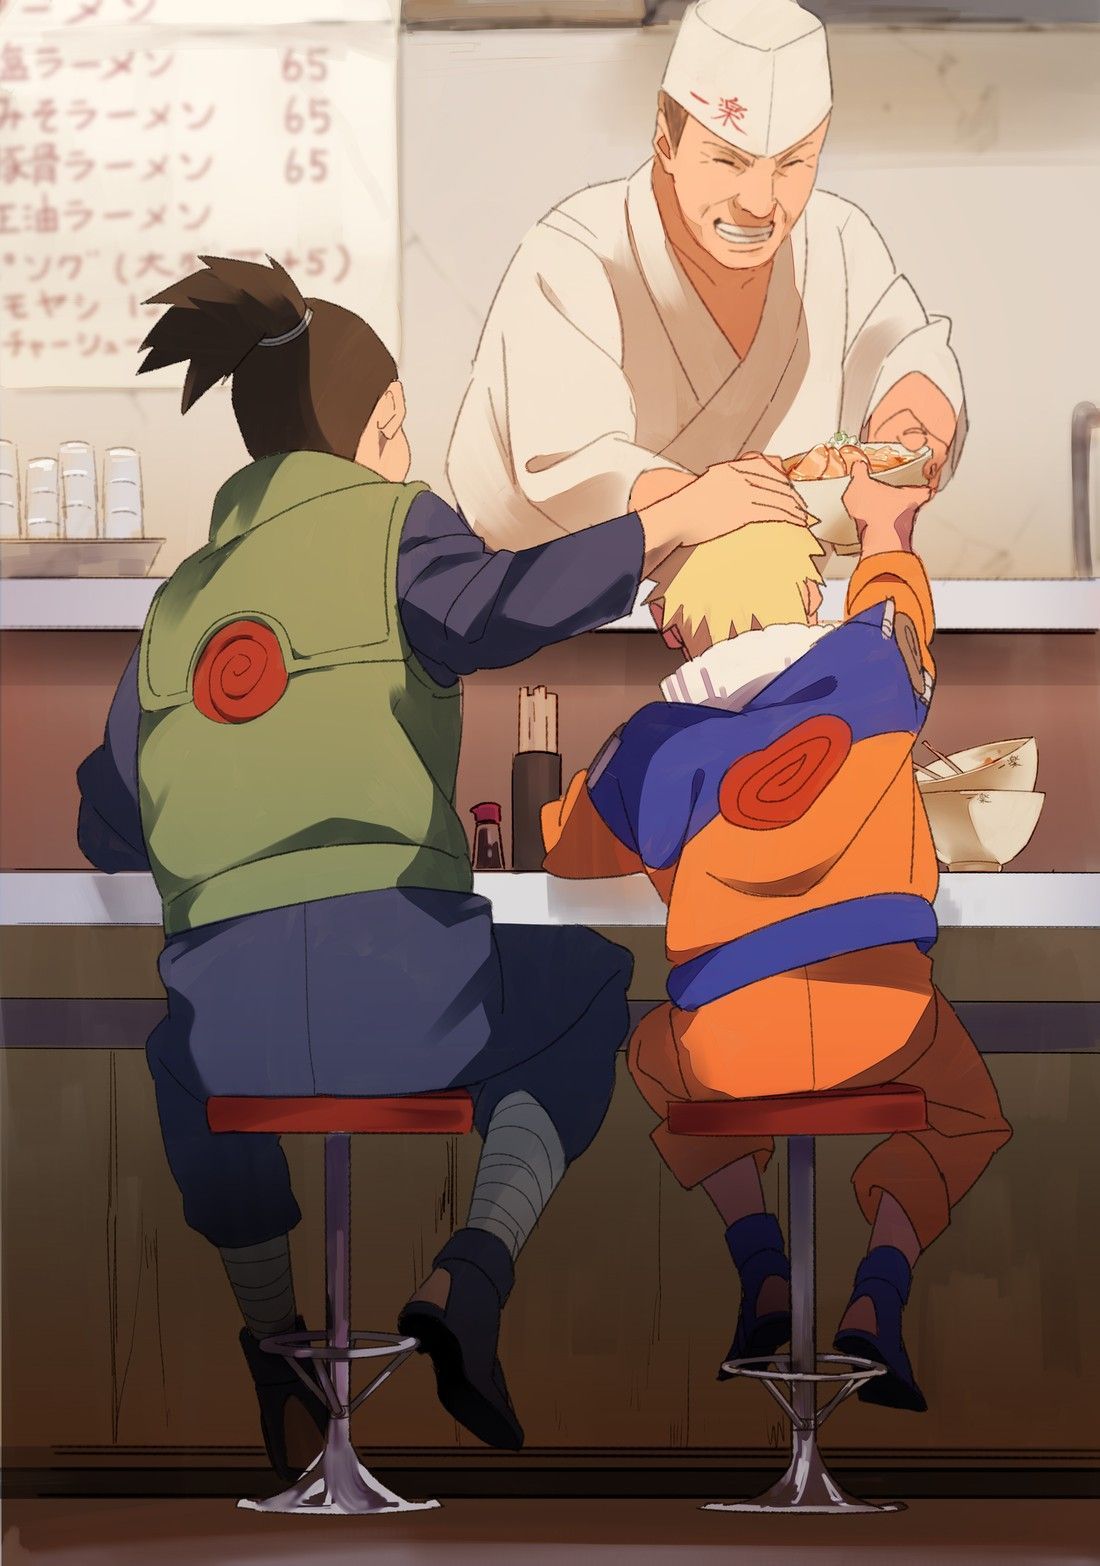 Naruto with Iruka eating ramen -Sure brings back memories. Naruto